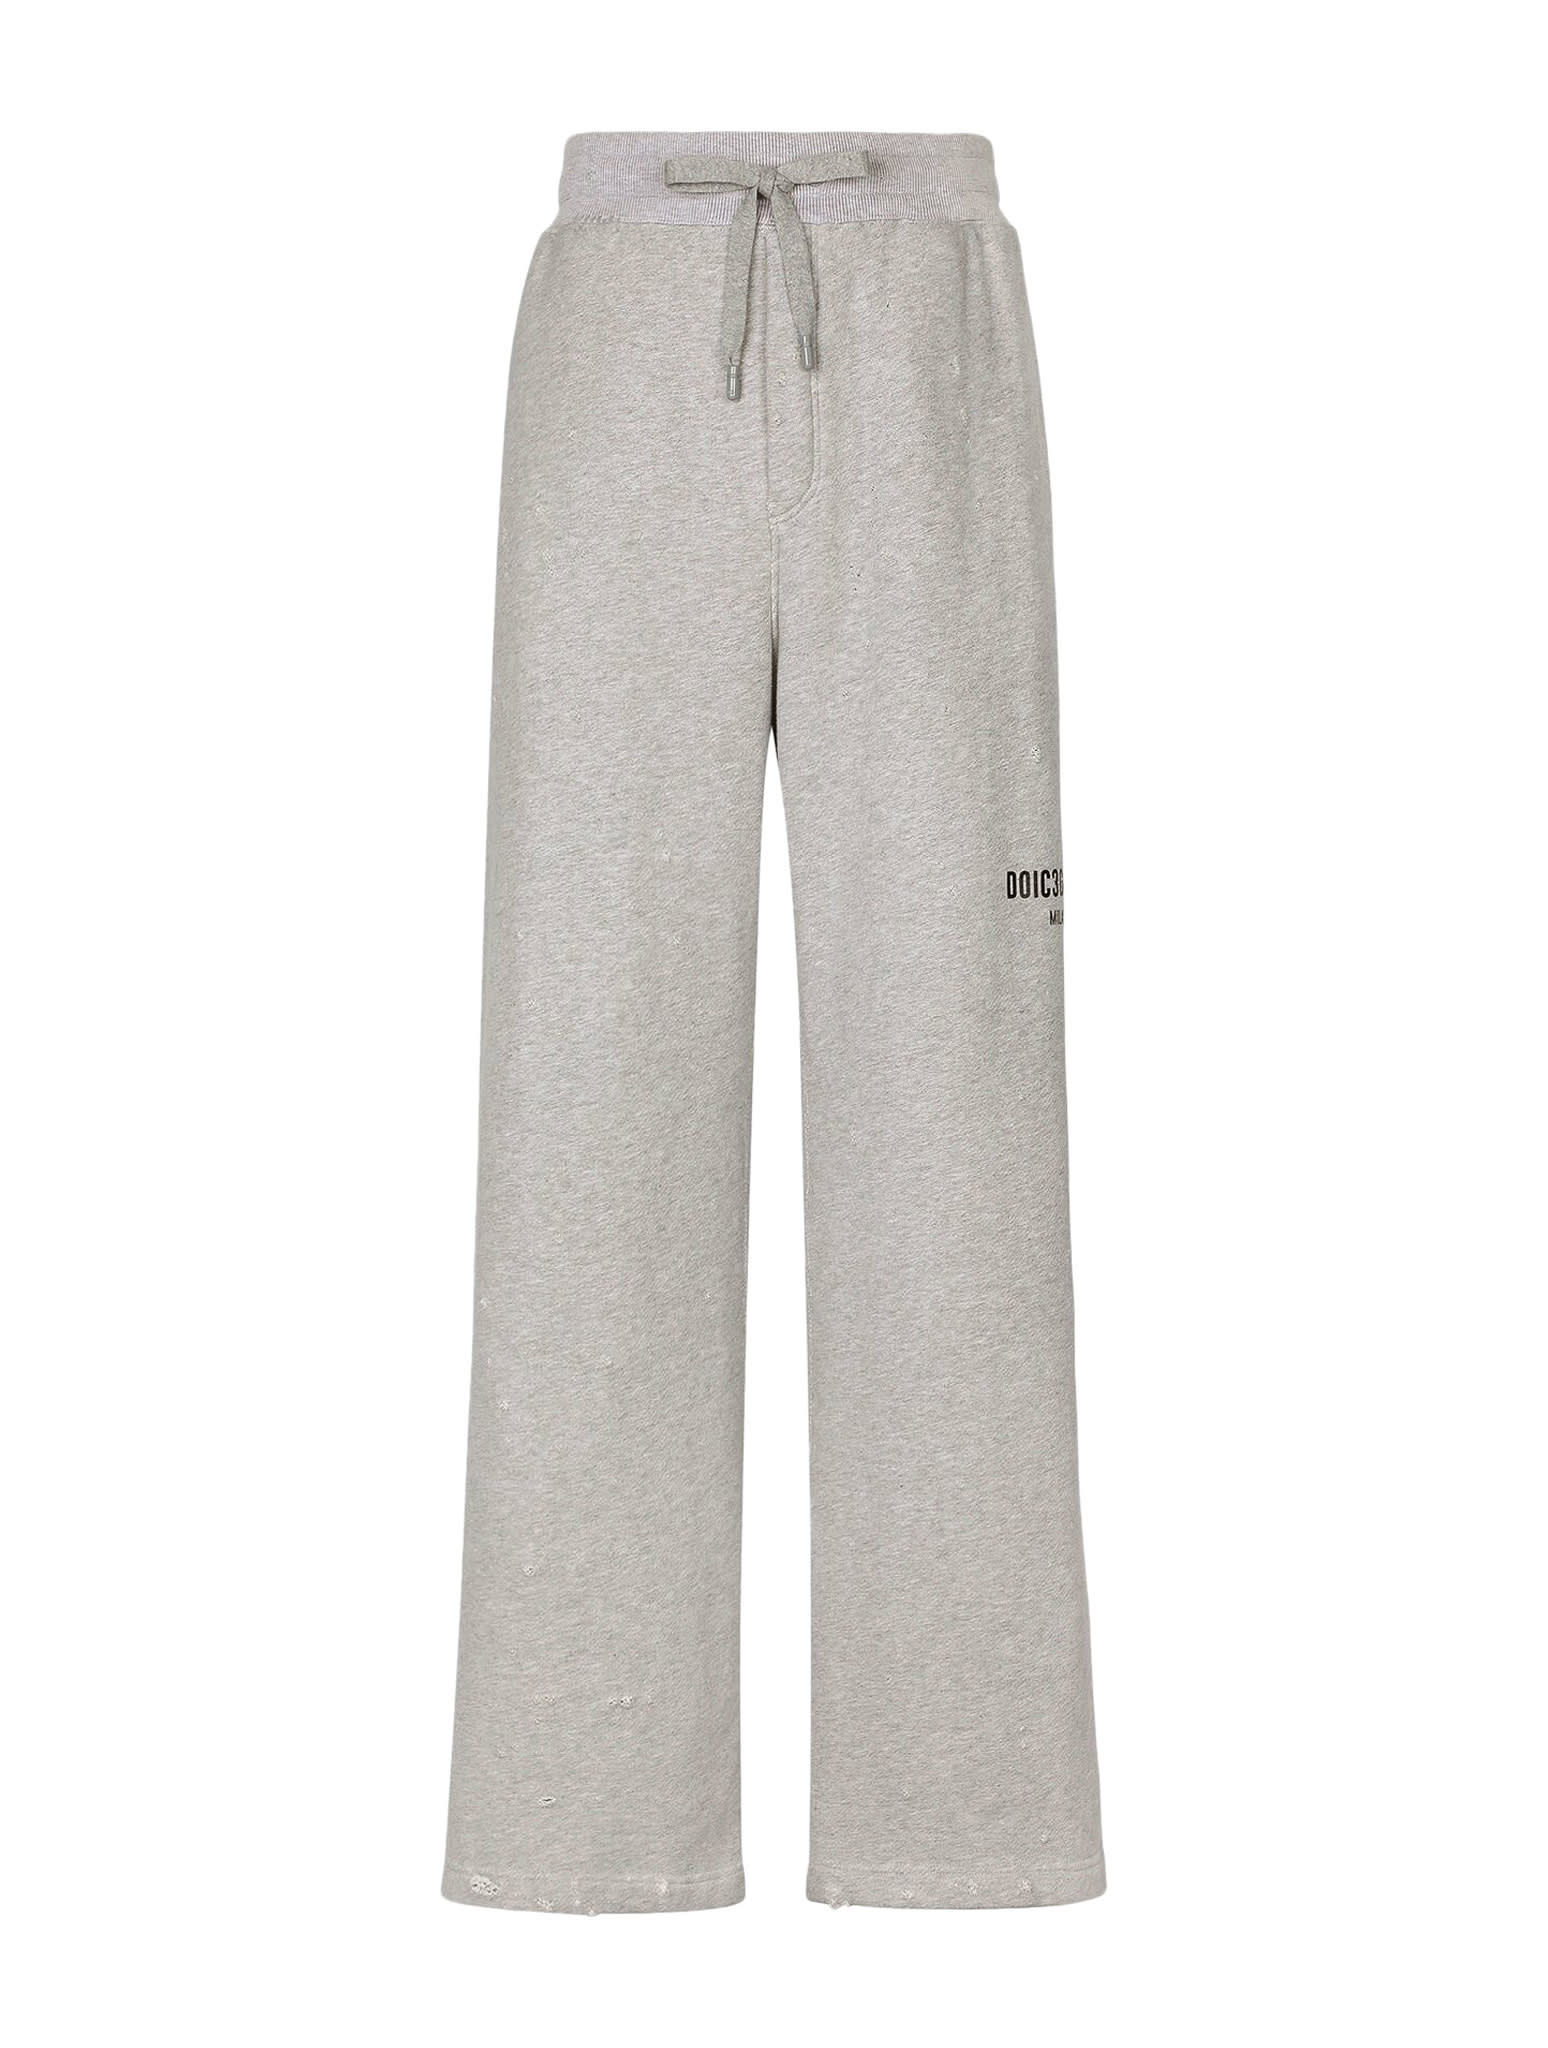 Dolce & Gabbana Pants In Melange Grey